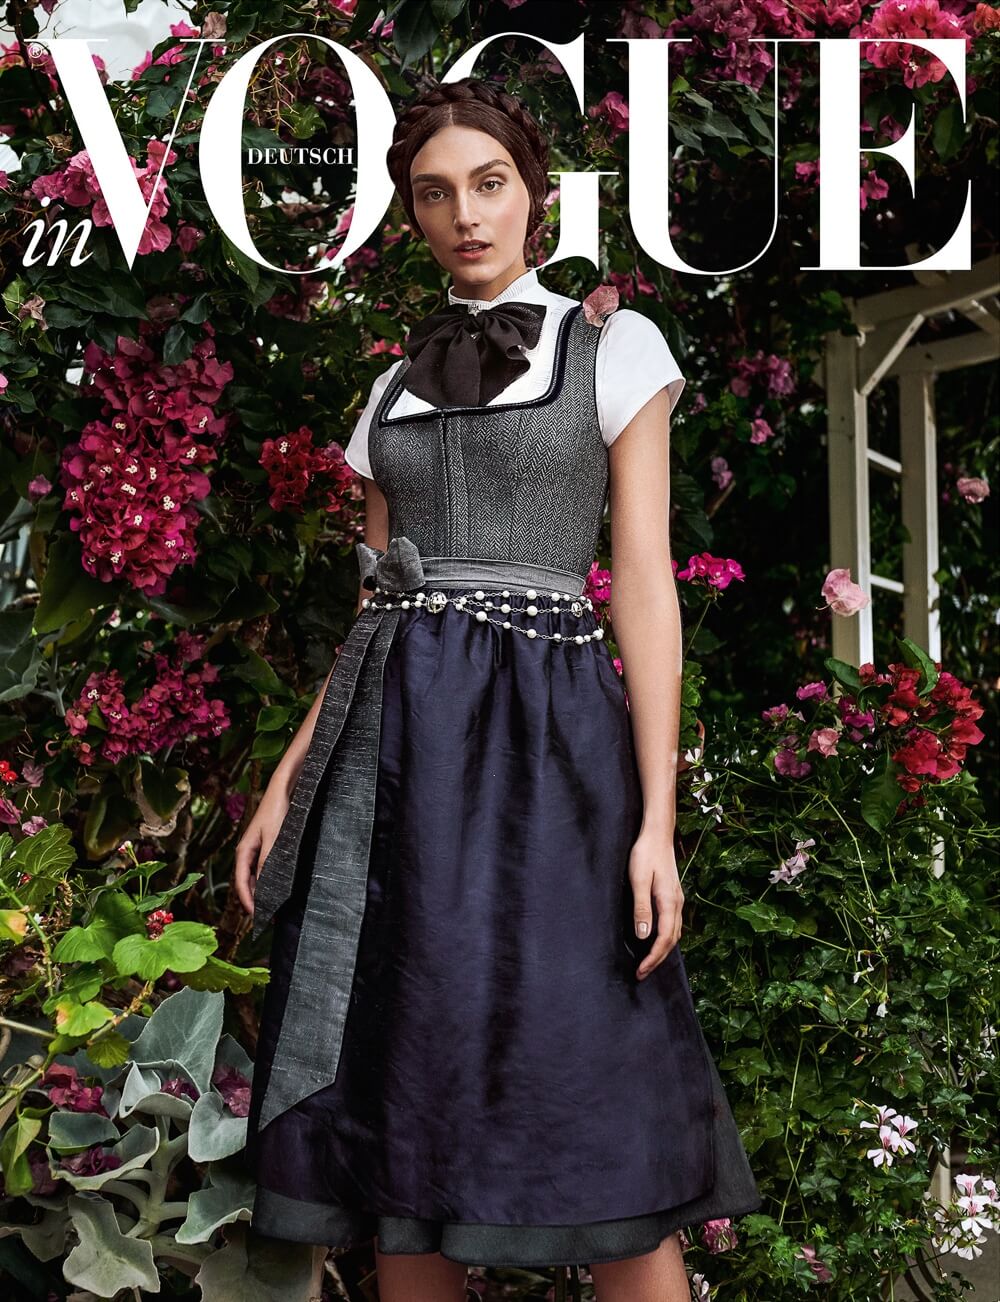 Vogue-Germany-August-2018-Deimante-Misiunaite-Andreas-Ortner-3